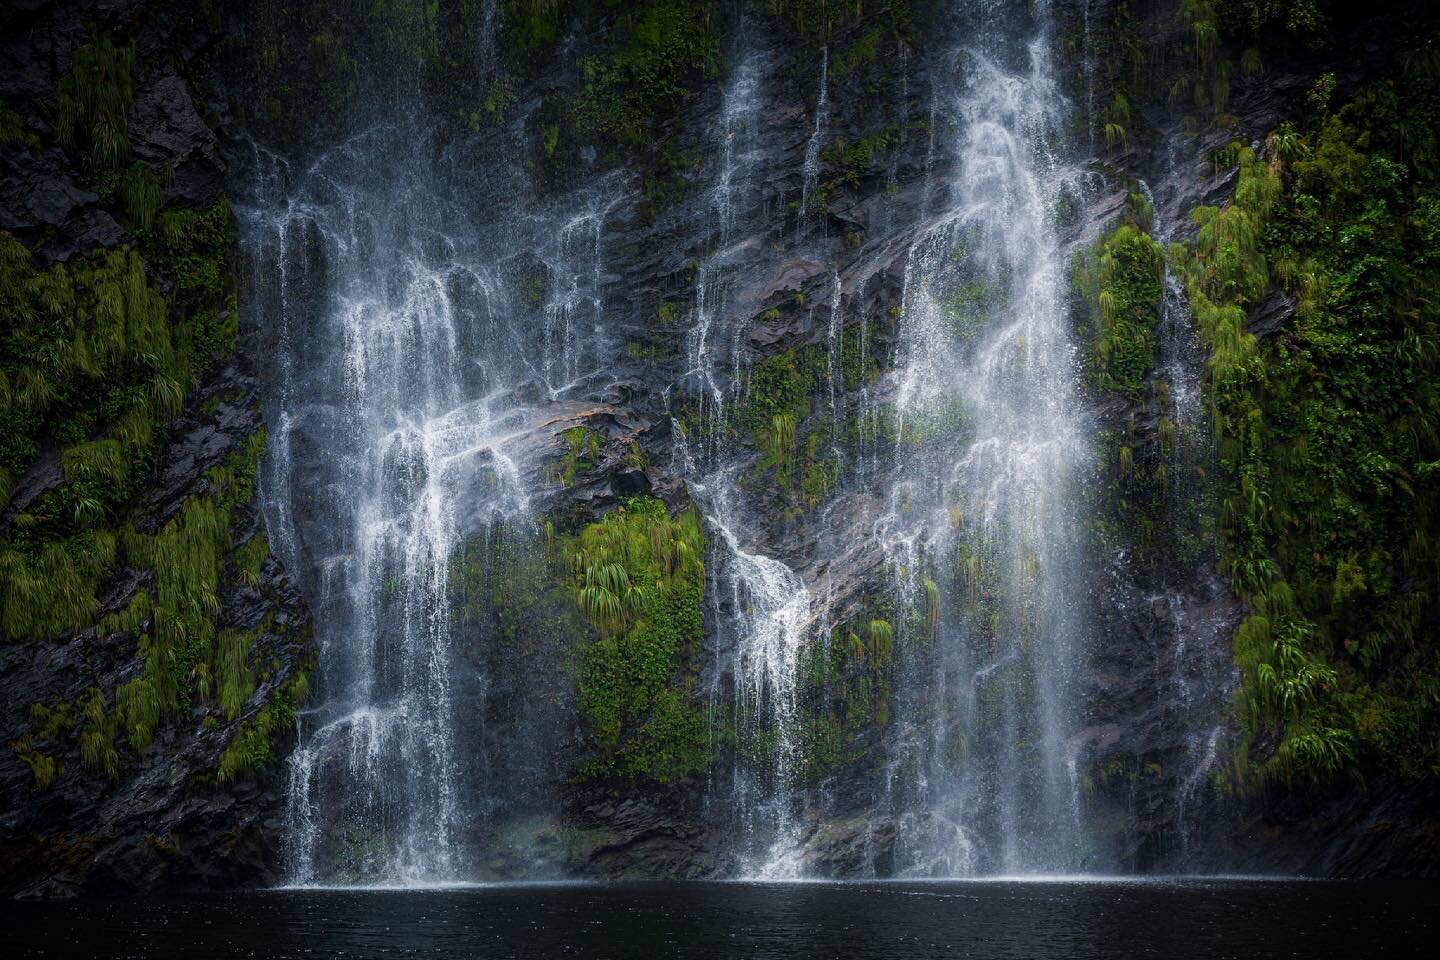 Doubtful Sound, November 2020

#doubtfulsound #newzealand #waterfall #waterfalls #fjordland